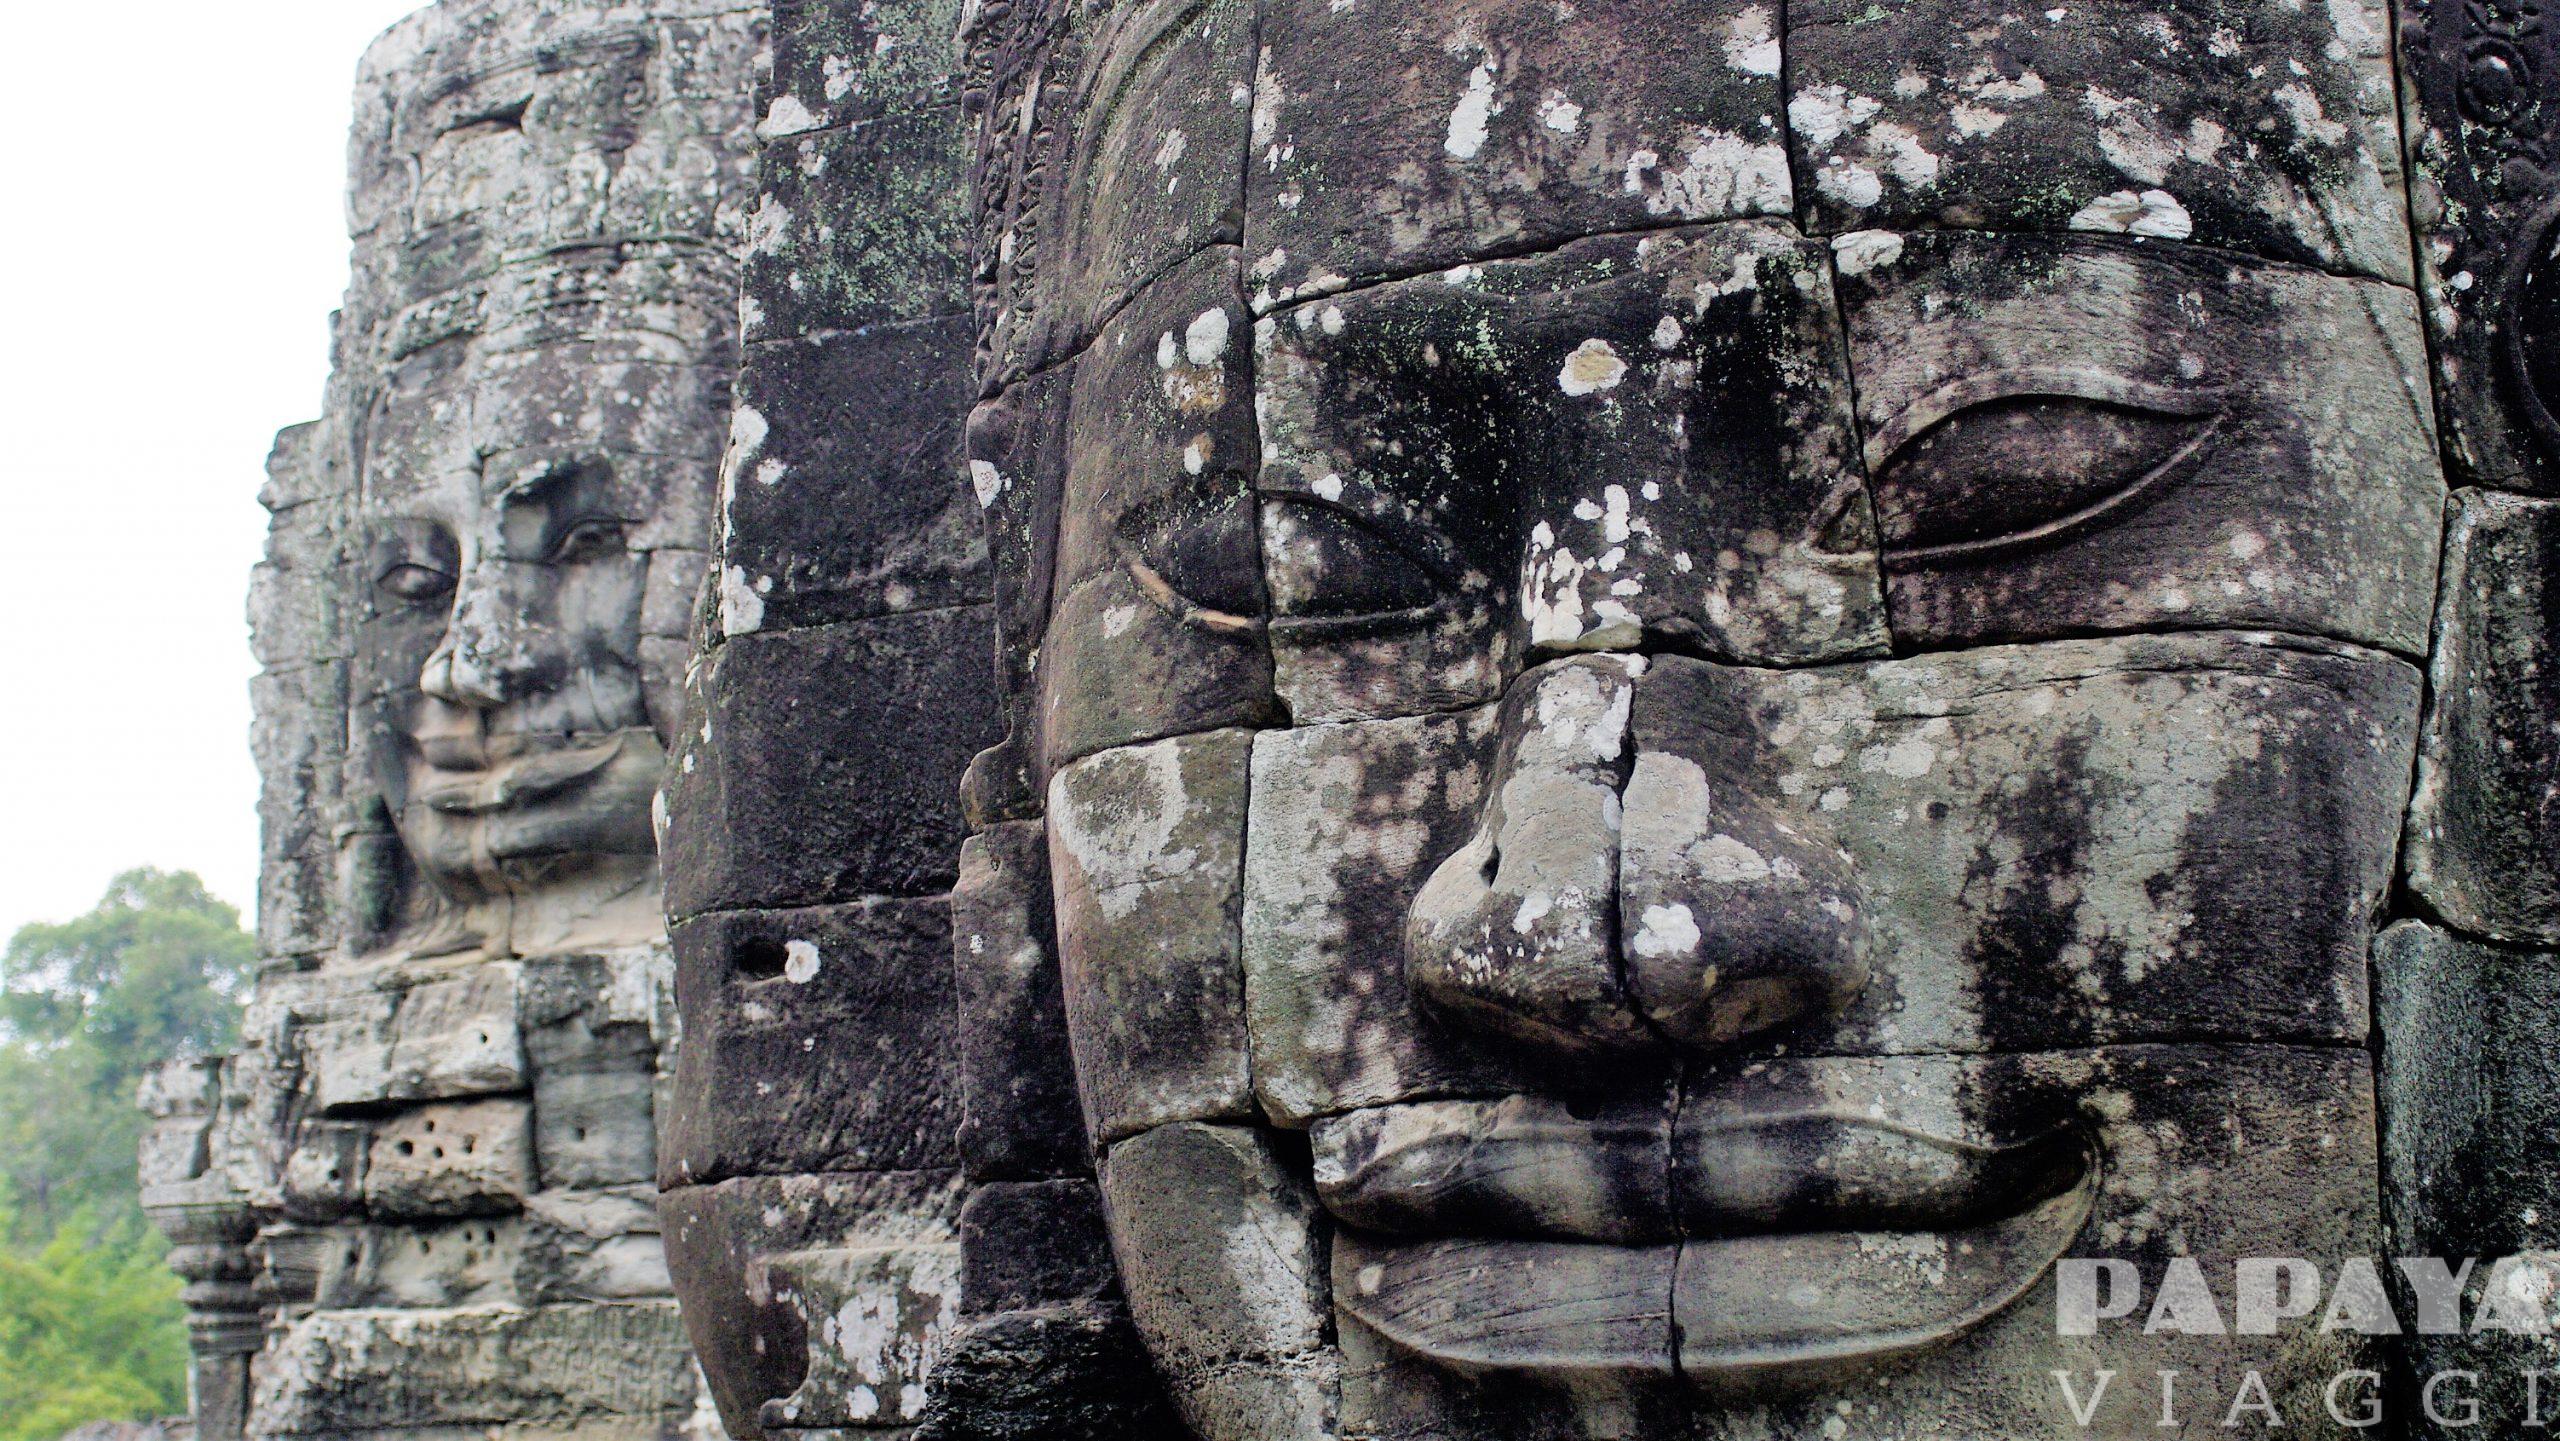 SE Asia Stile Antico Statua in Legno di Teak Cambogia